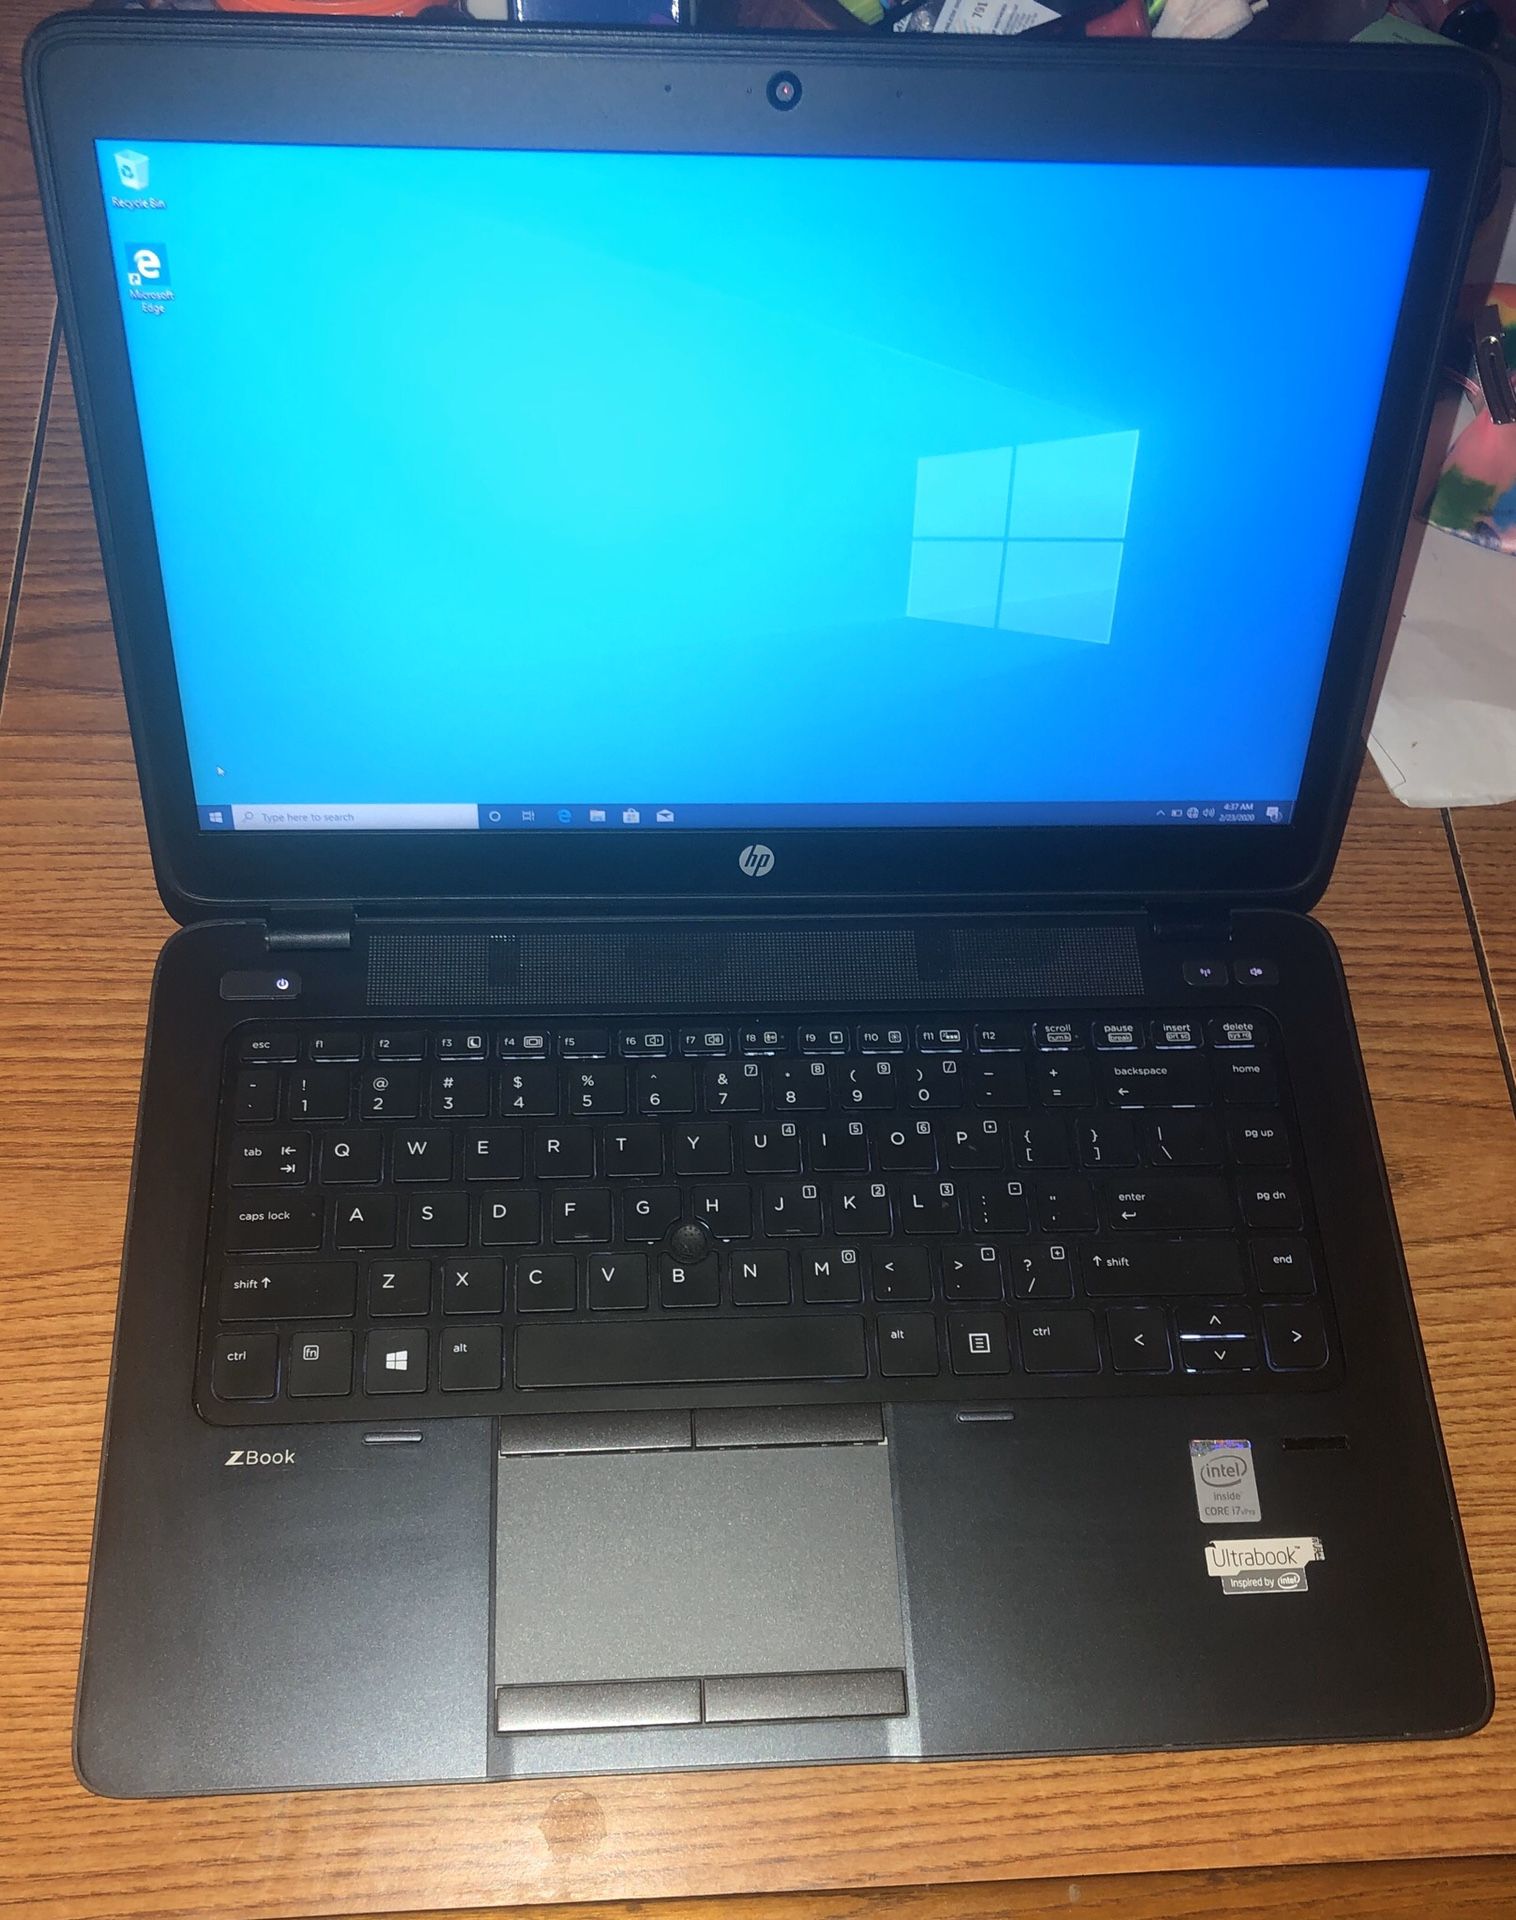 Awesome 14” Hp Zbook i7 Laptop w/Windows 10